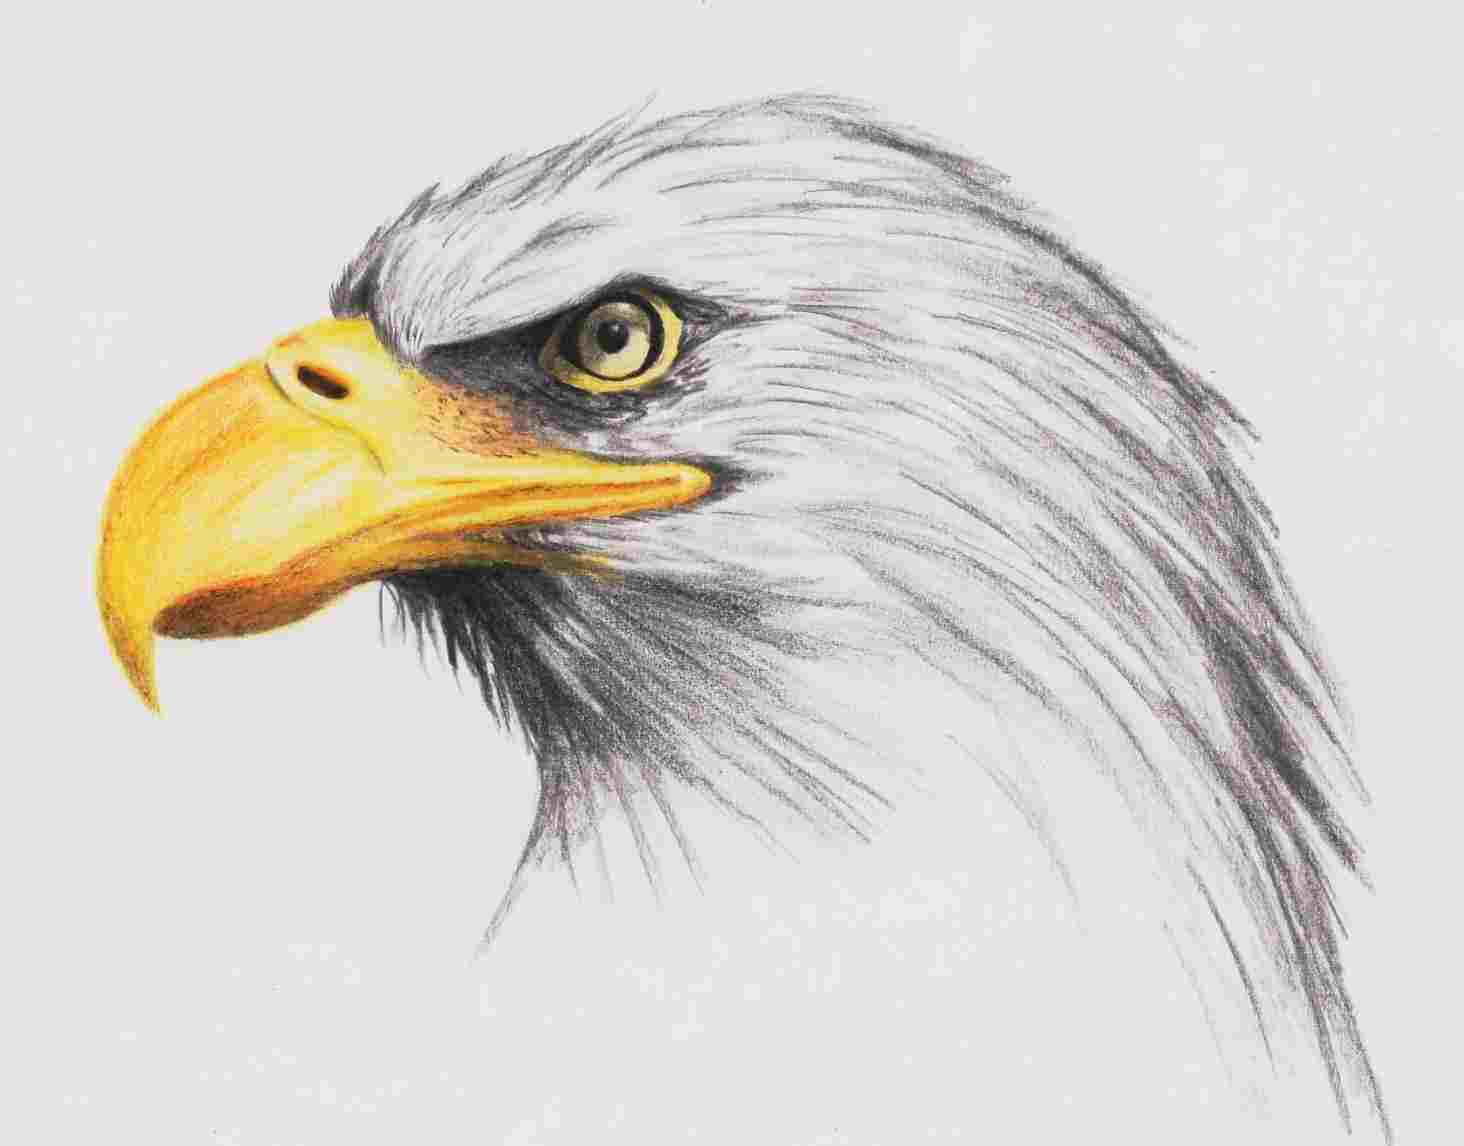 Native American Eagle Drawing at Explore